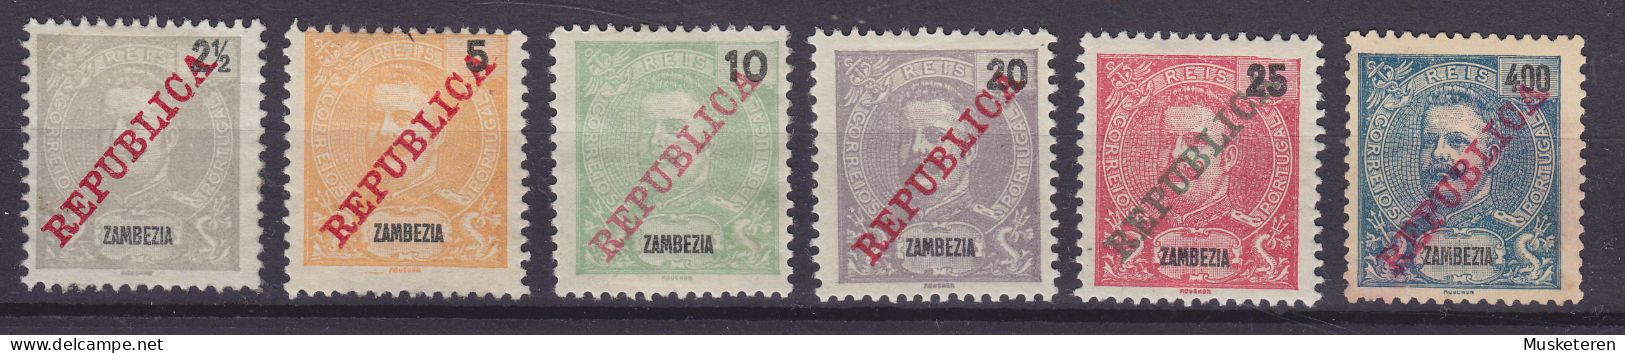 Zambezia 1911 Mi. 55-57, 59-60, 67 König Karl I. Overprinted REPUBLICA, MH*/MNG (*) (2 Scans) - Sambesi (Zambezi)